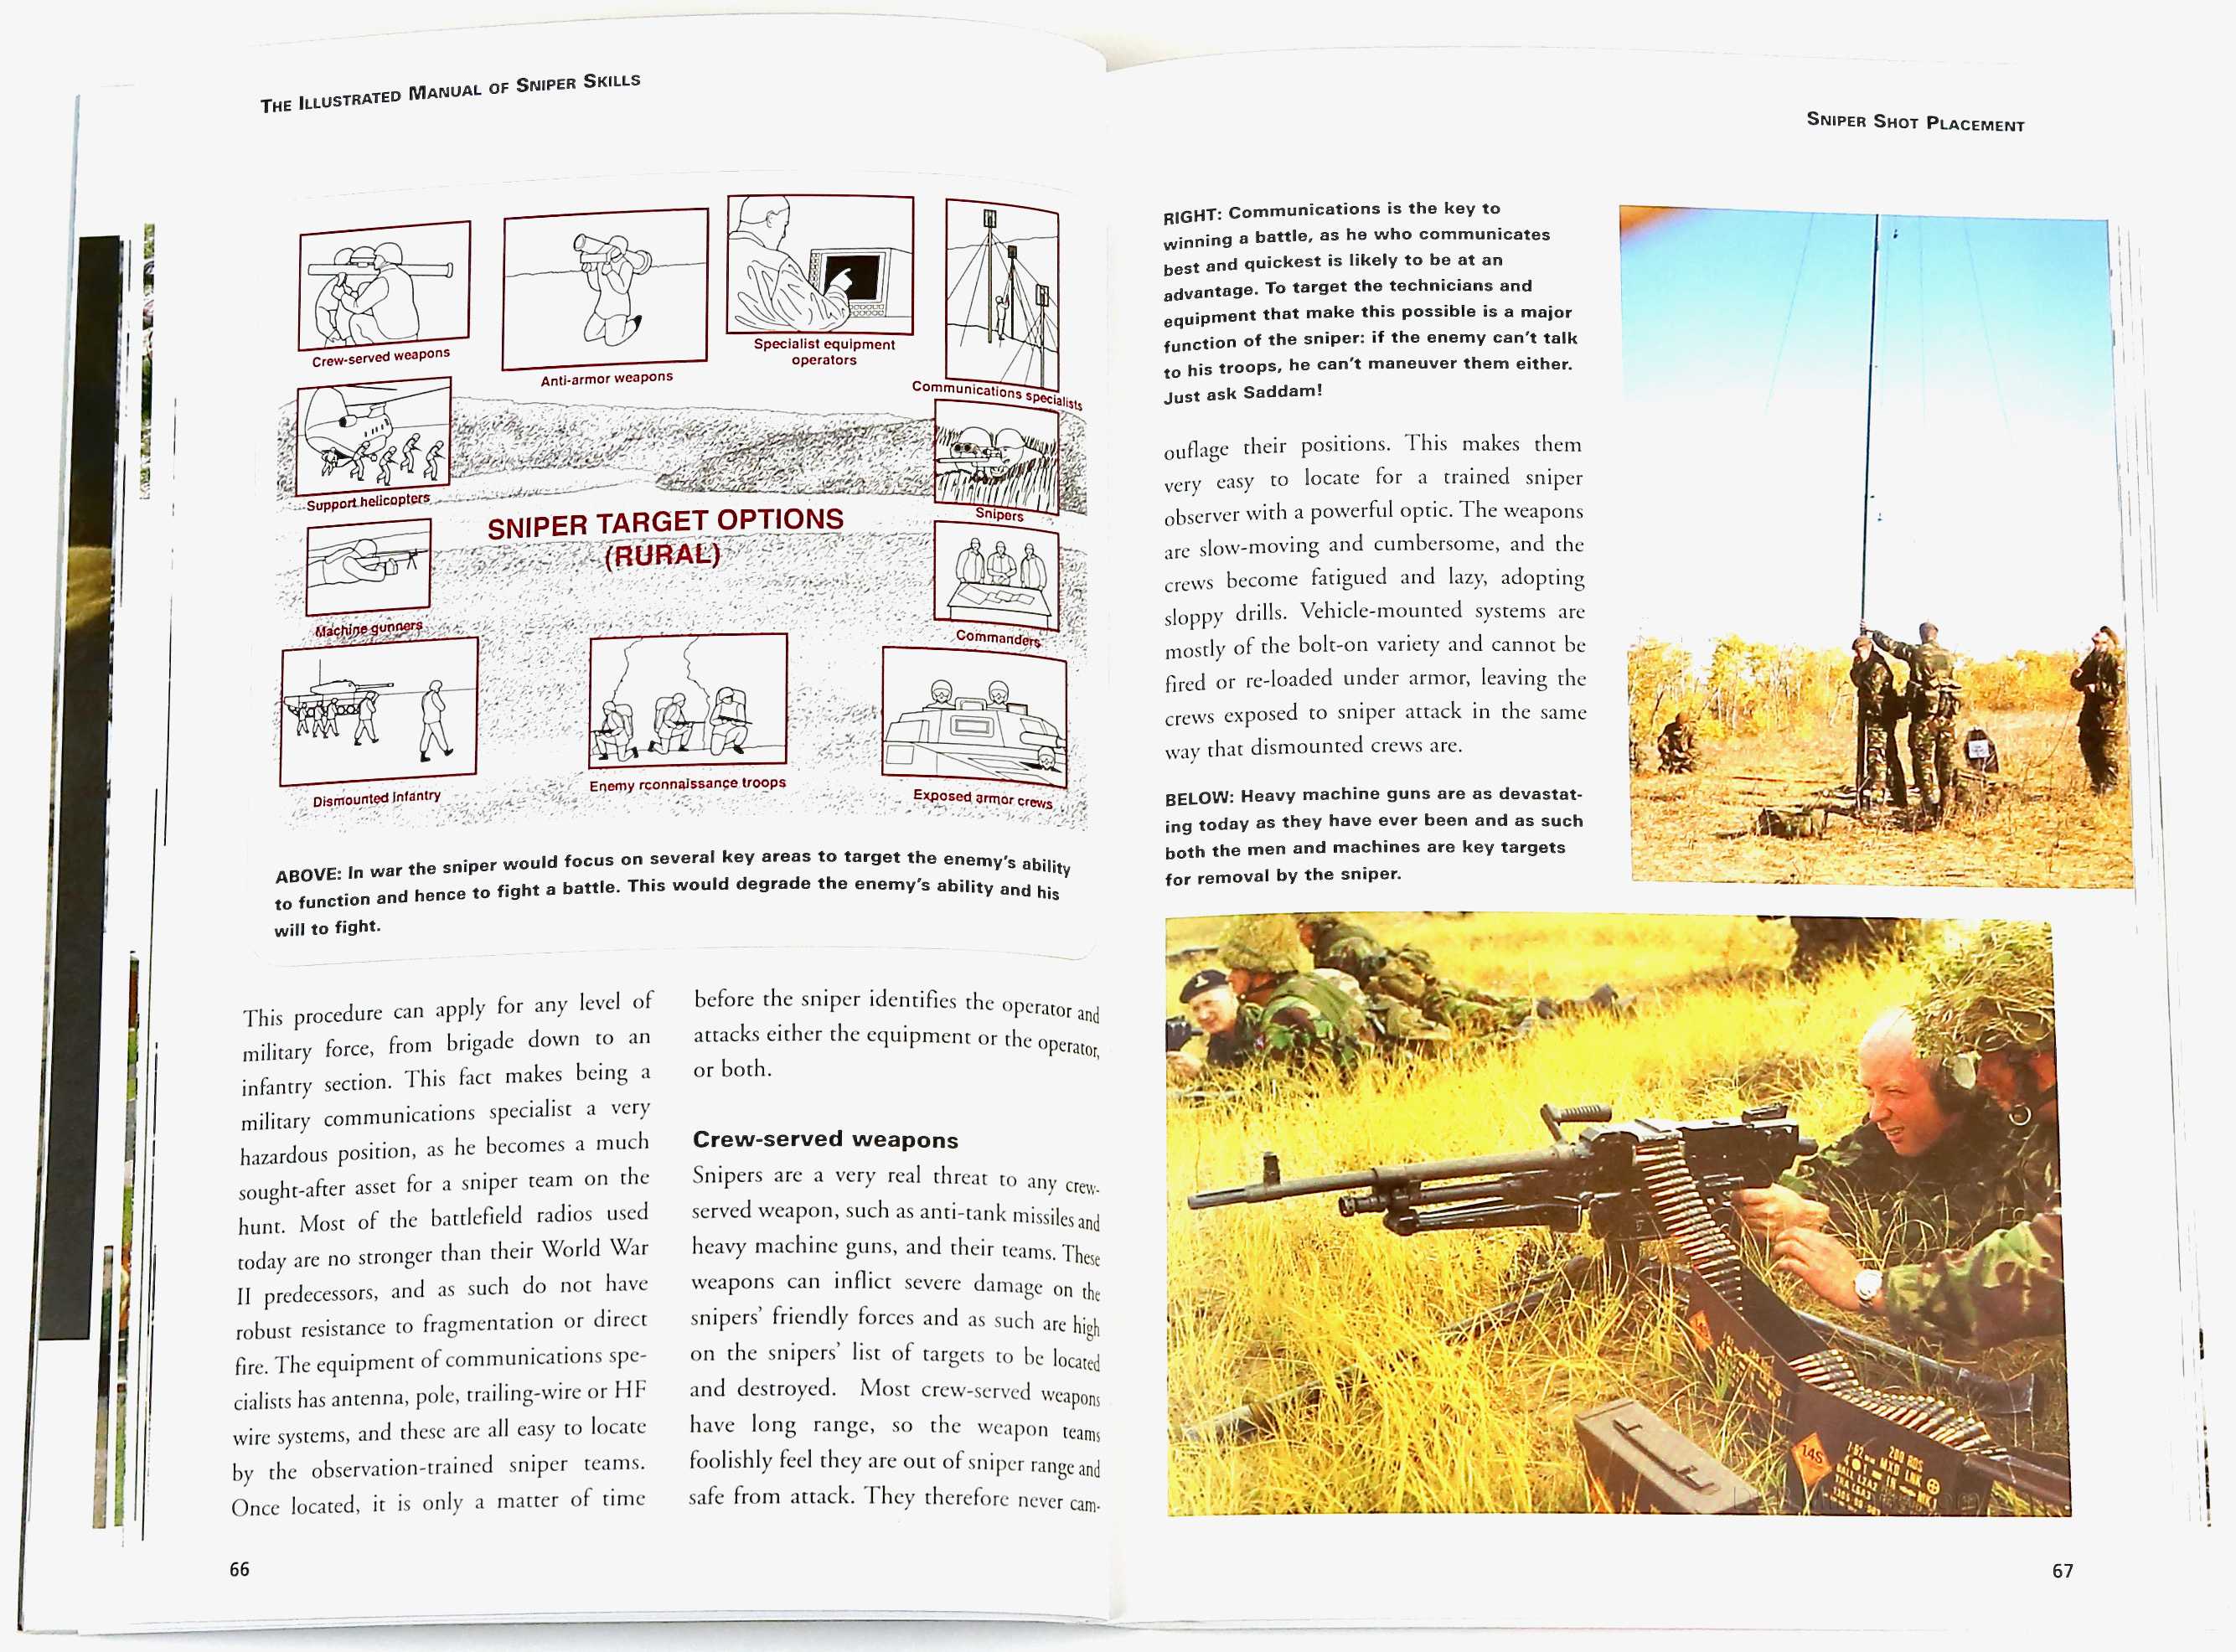 illustrated manual of sniper skills download